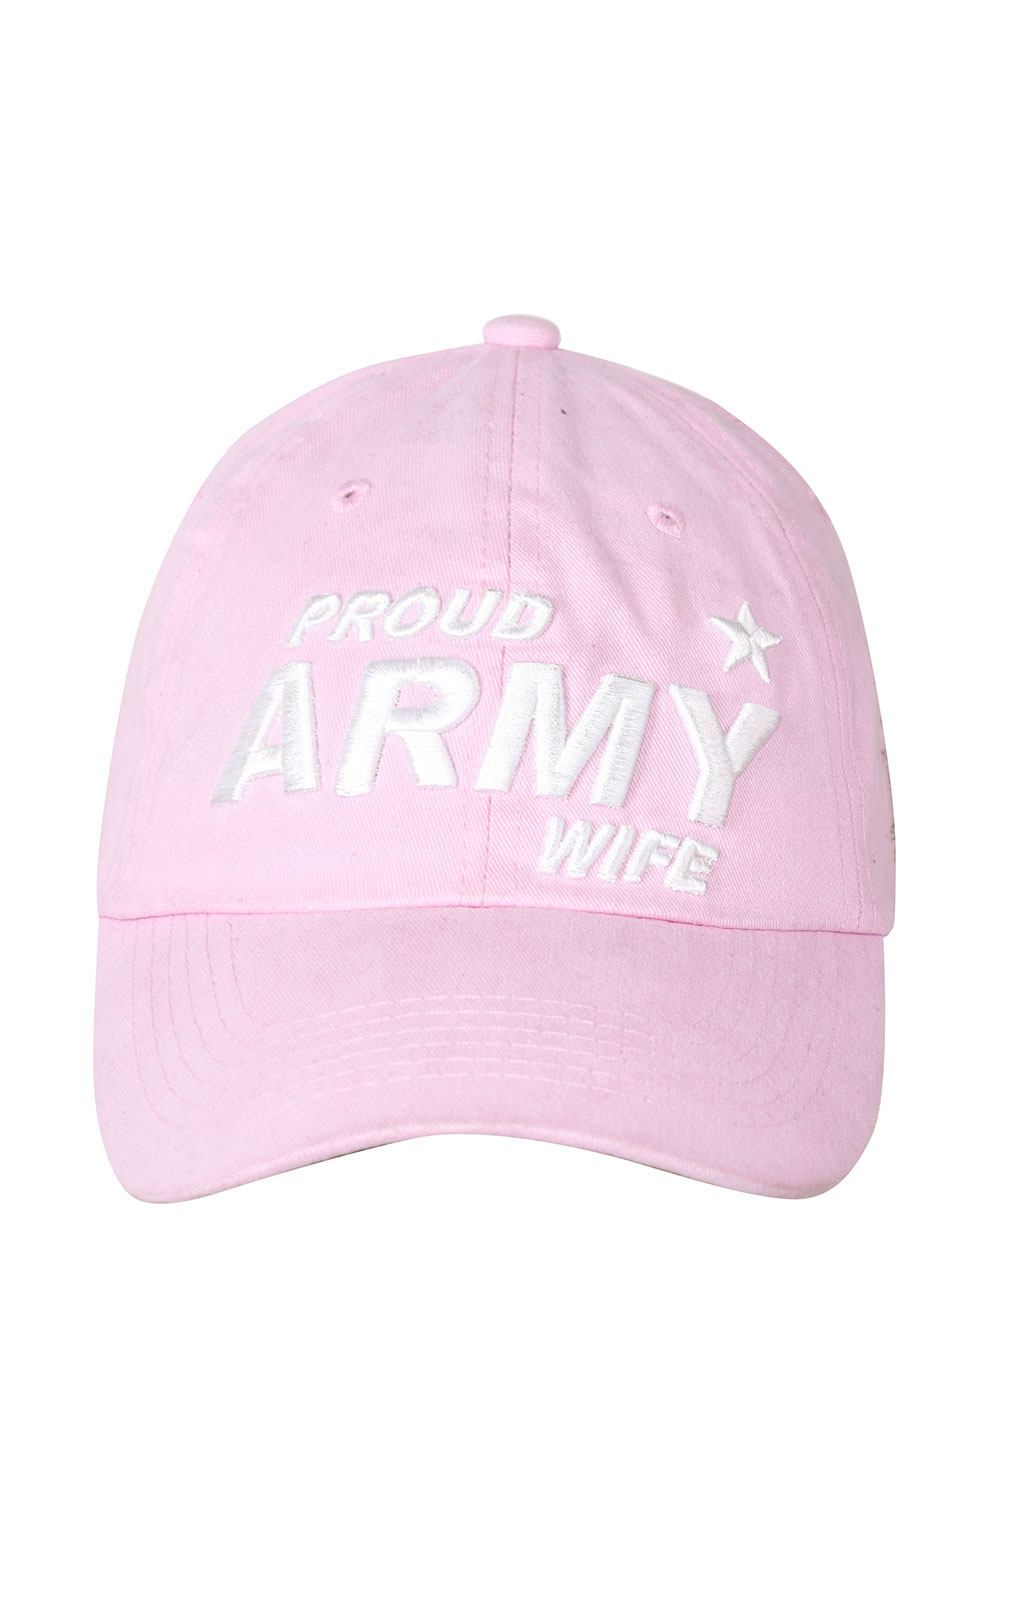 Бейсболка EC PROUD ARMY WIFE pink ladies (5831) 